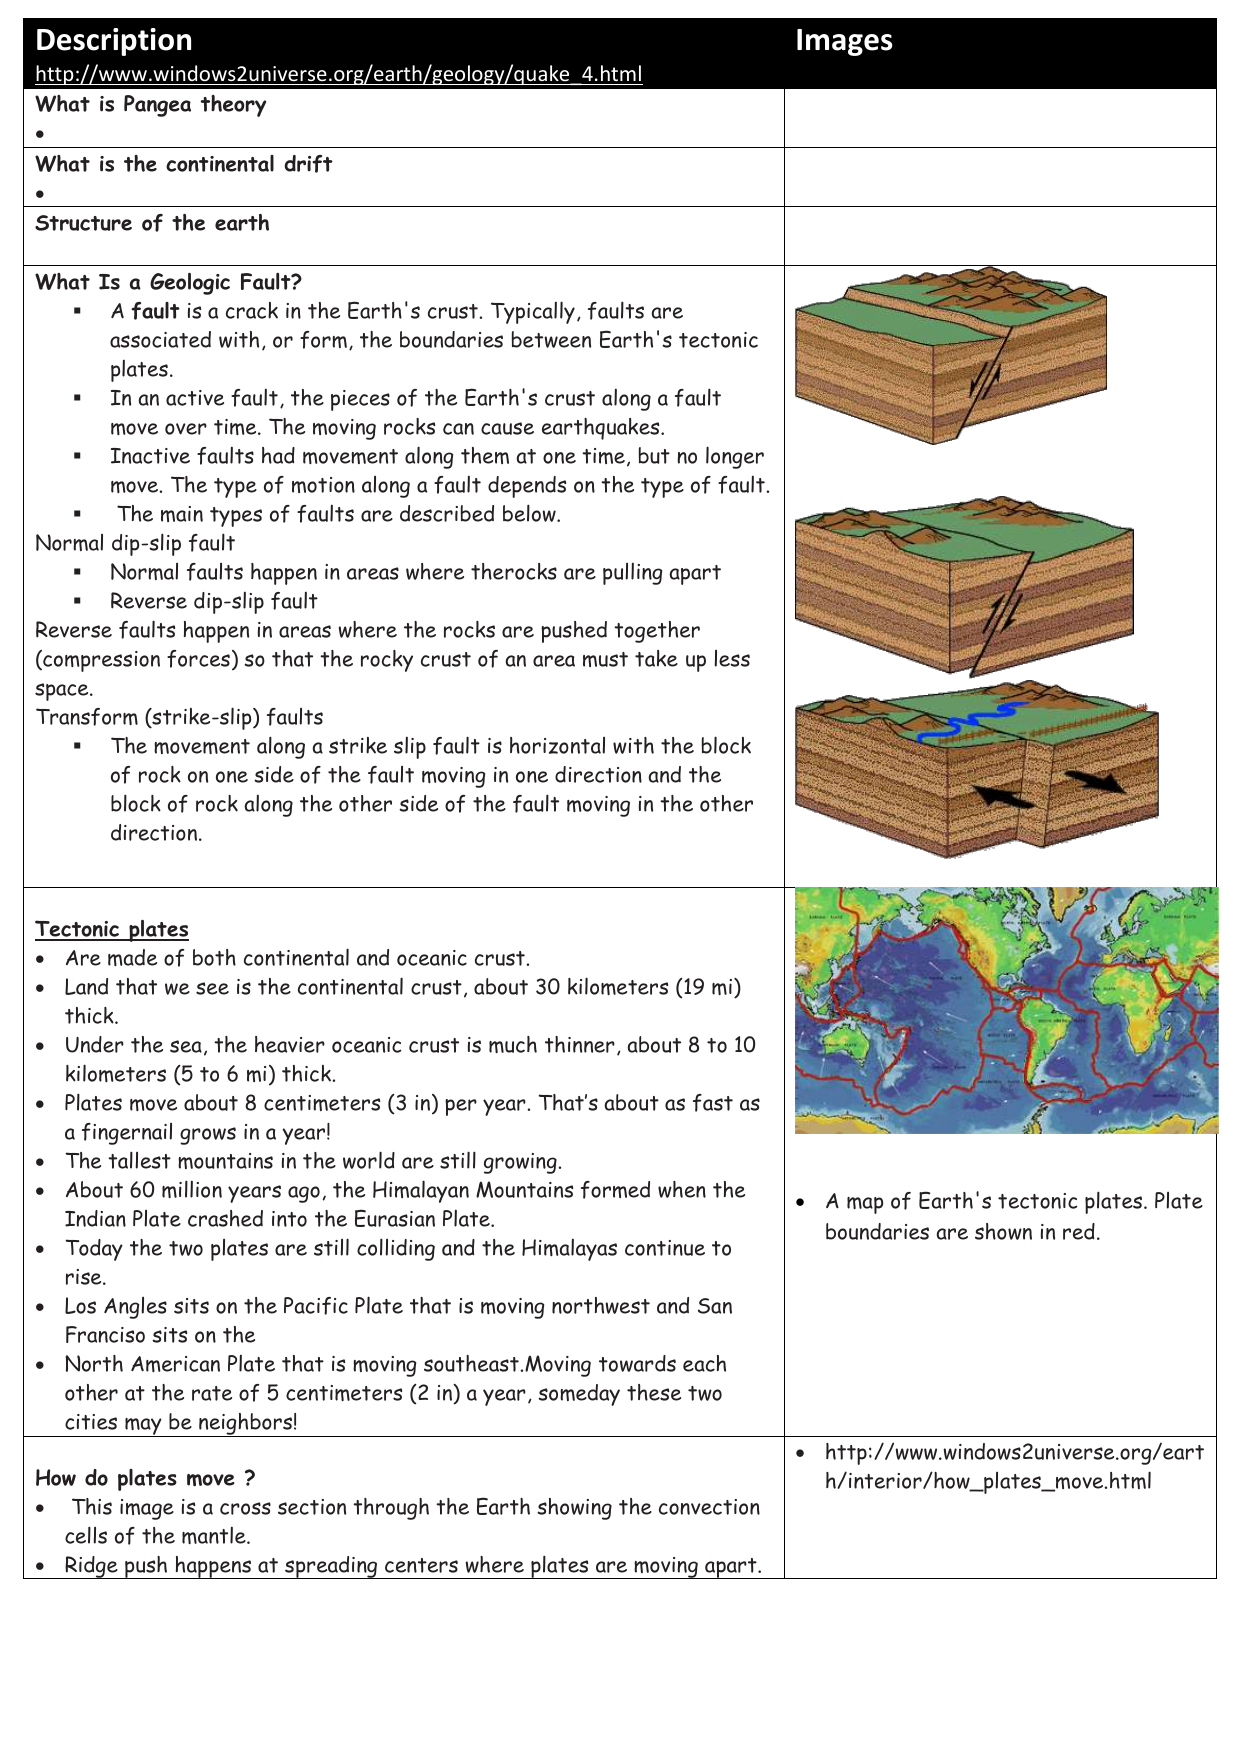 earthquake assignment pdf